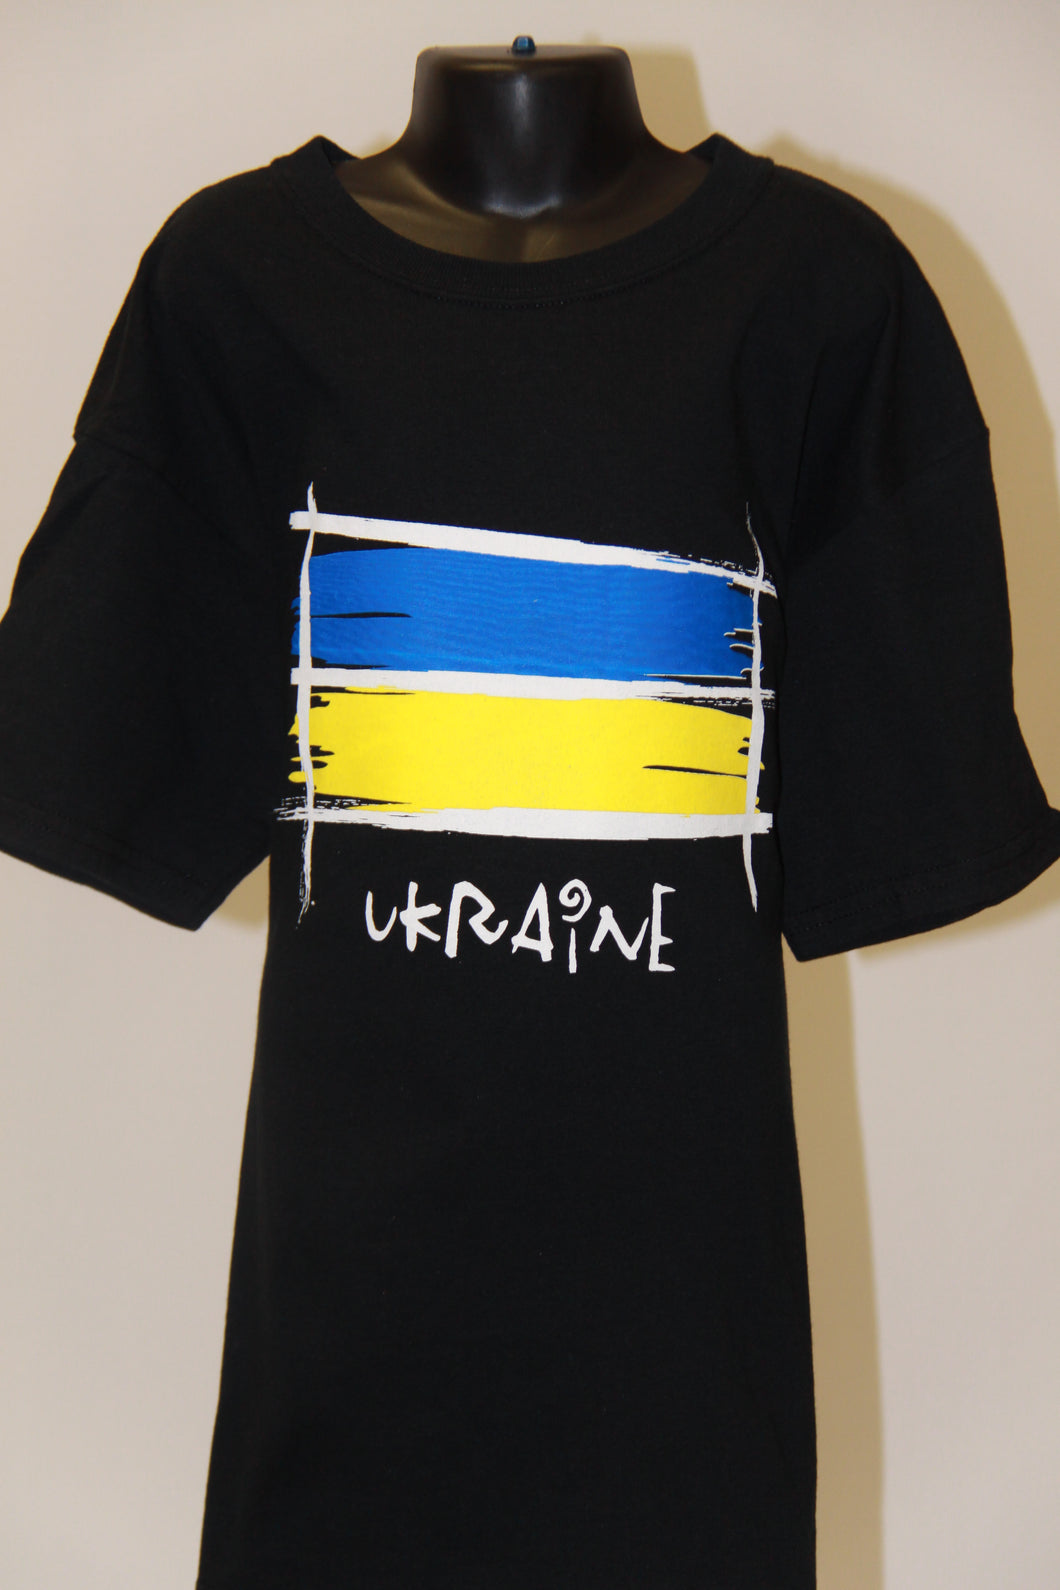 Sketch Ukraine- Black